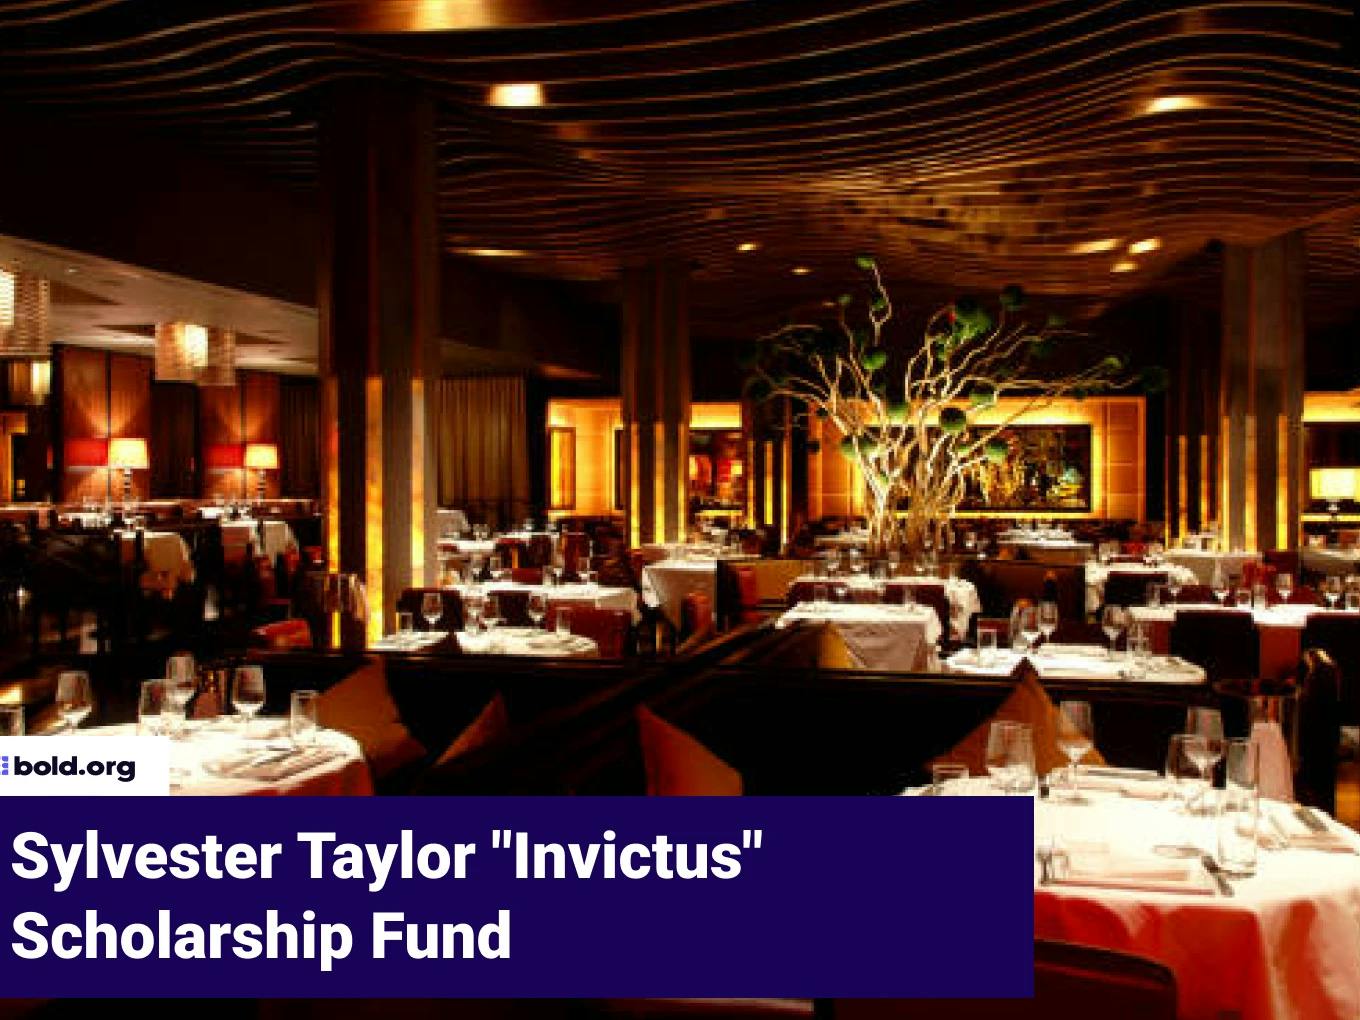 Sylvester Taylor "Invictus" Scholarship Fund